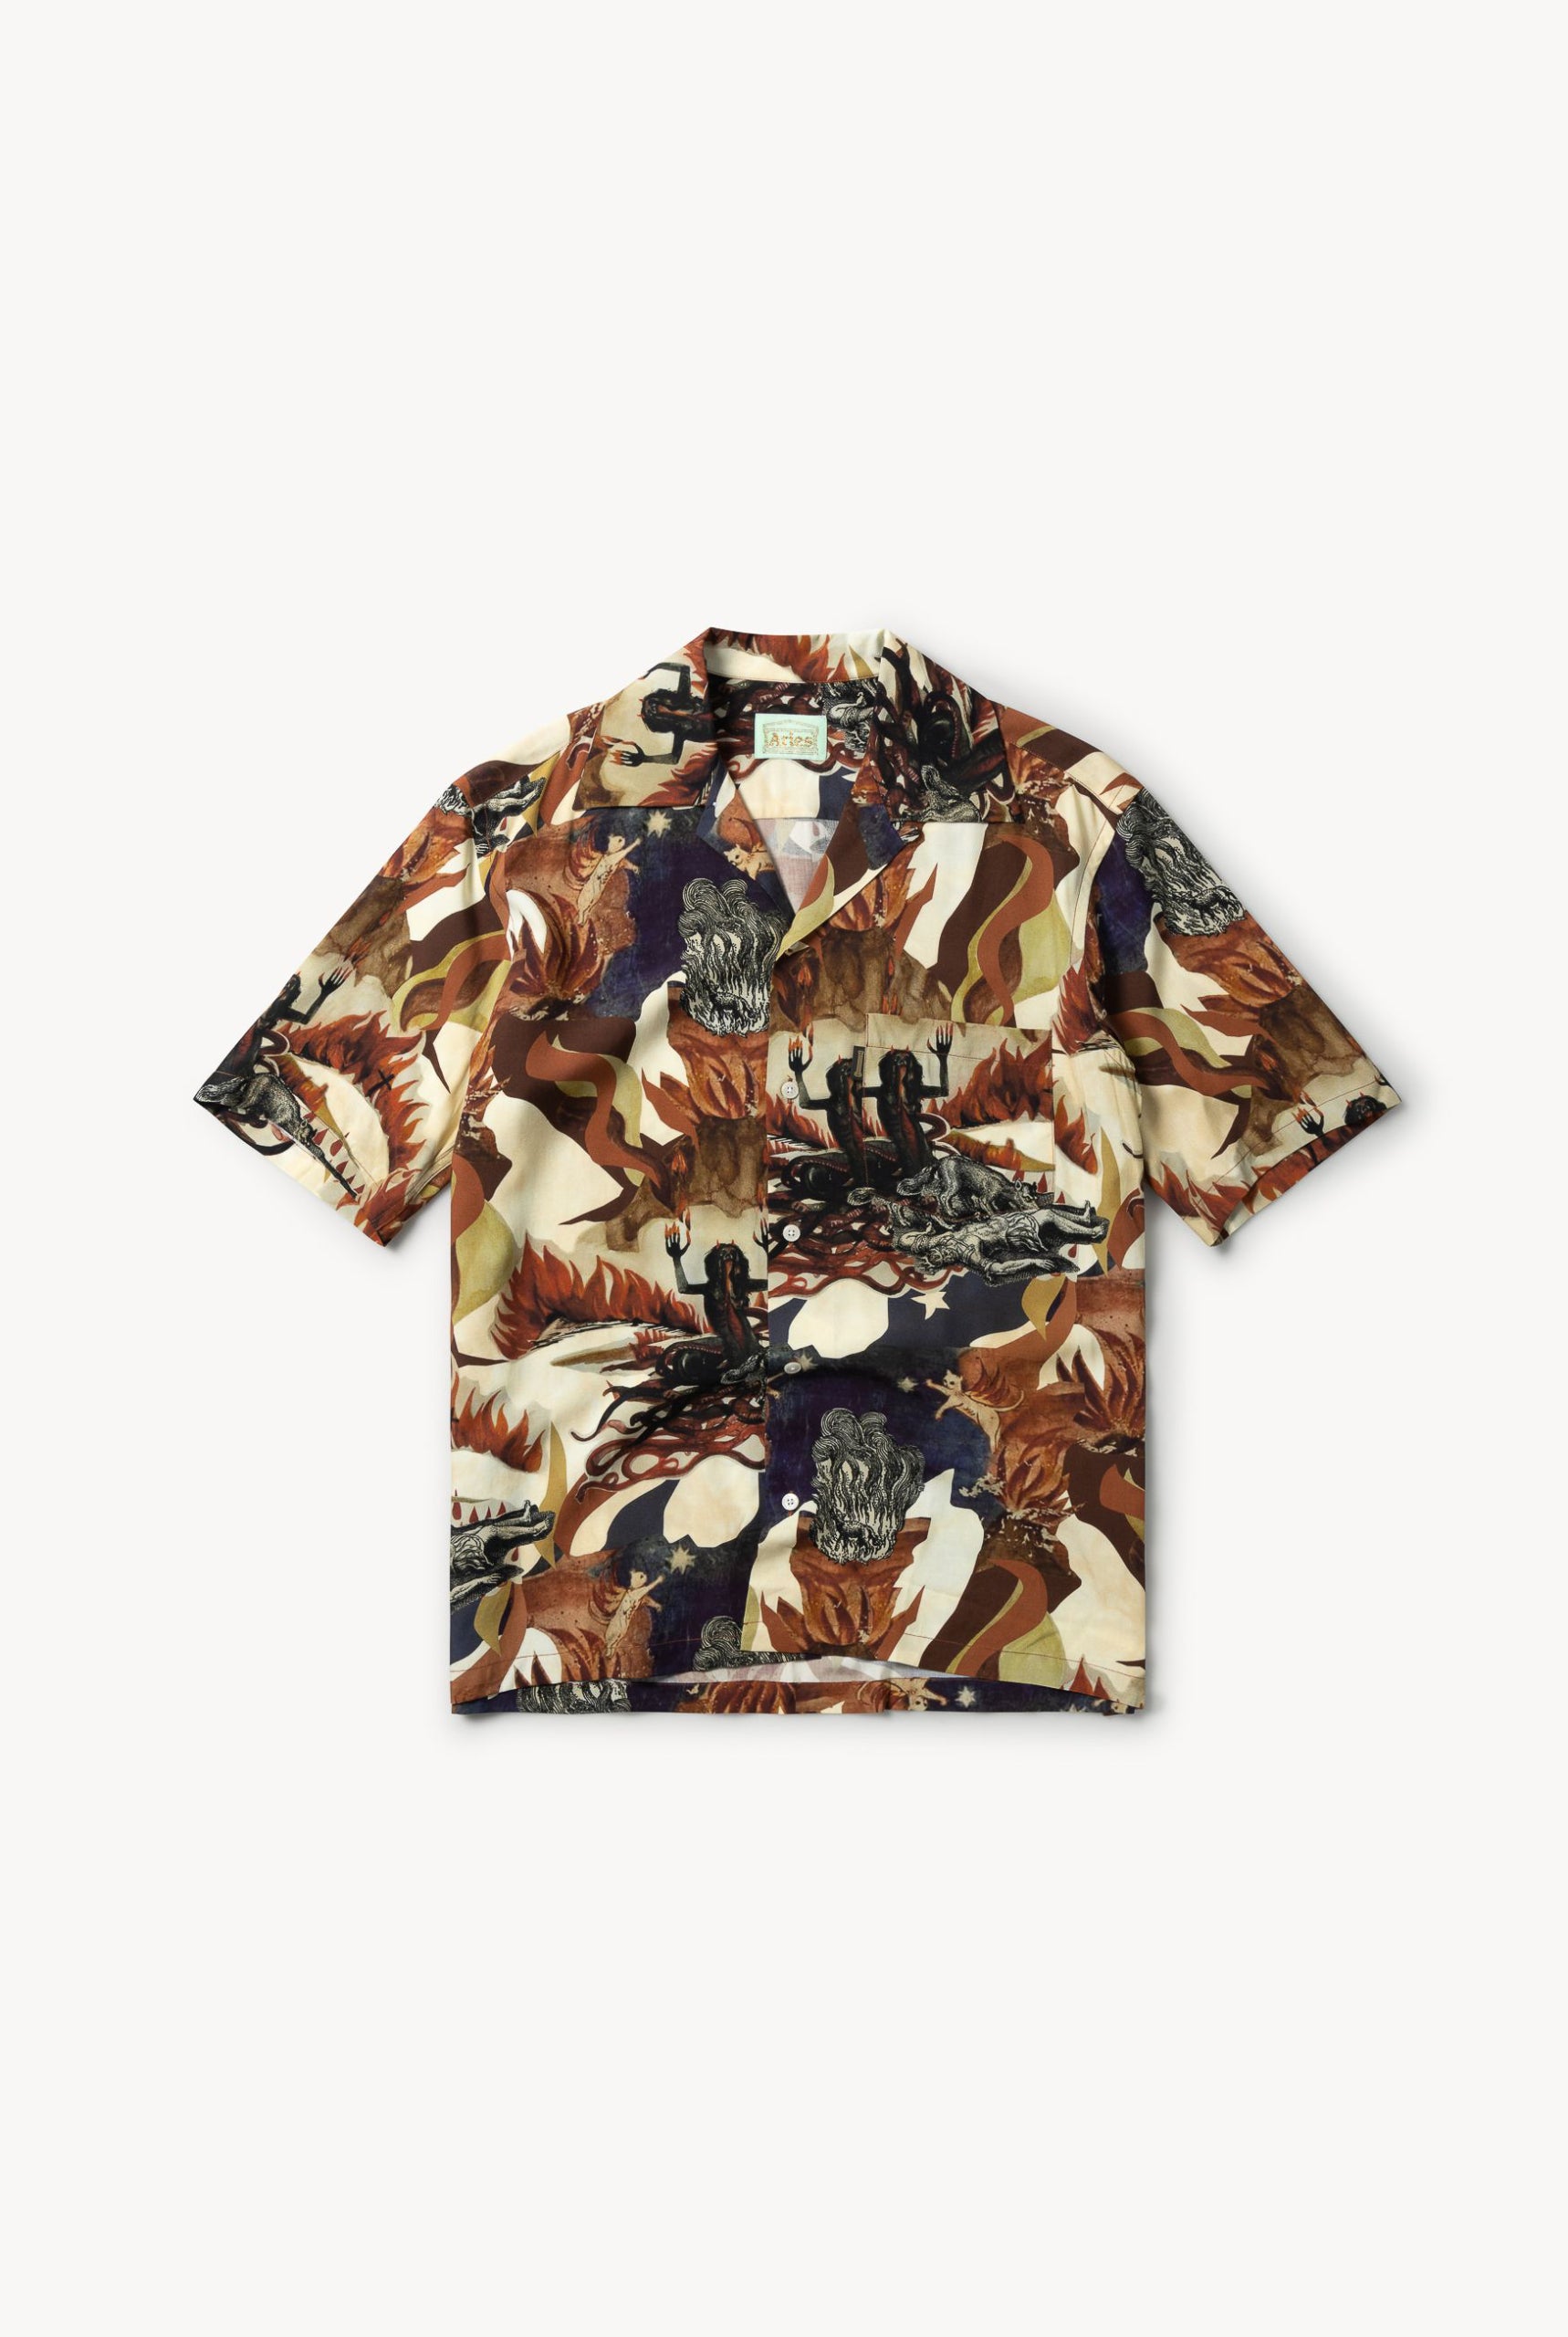 Aries Arise Scarf Print Silk Hawaiian S/S Shirt - Shirts from